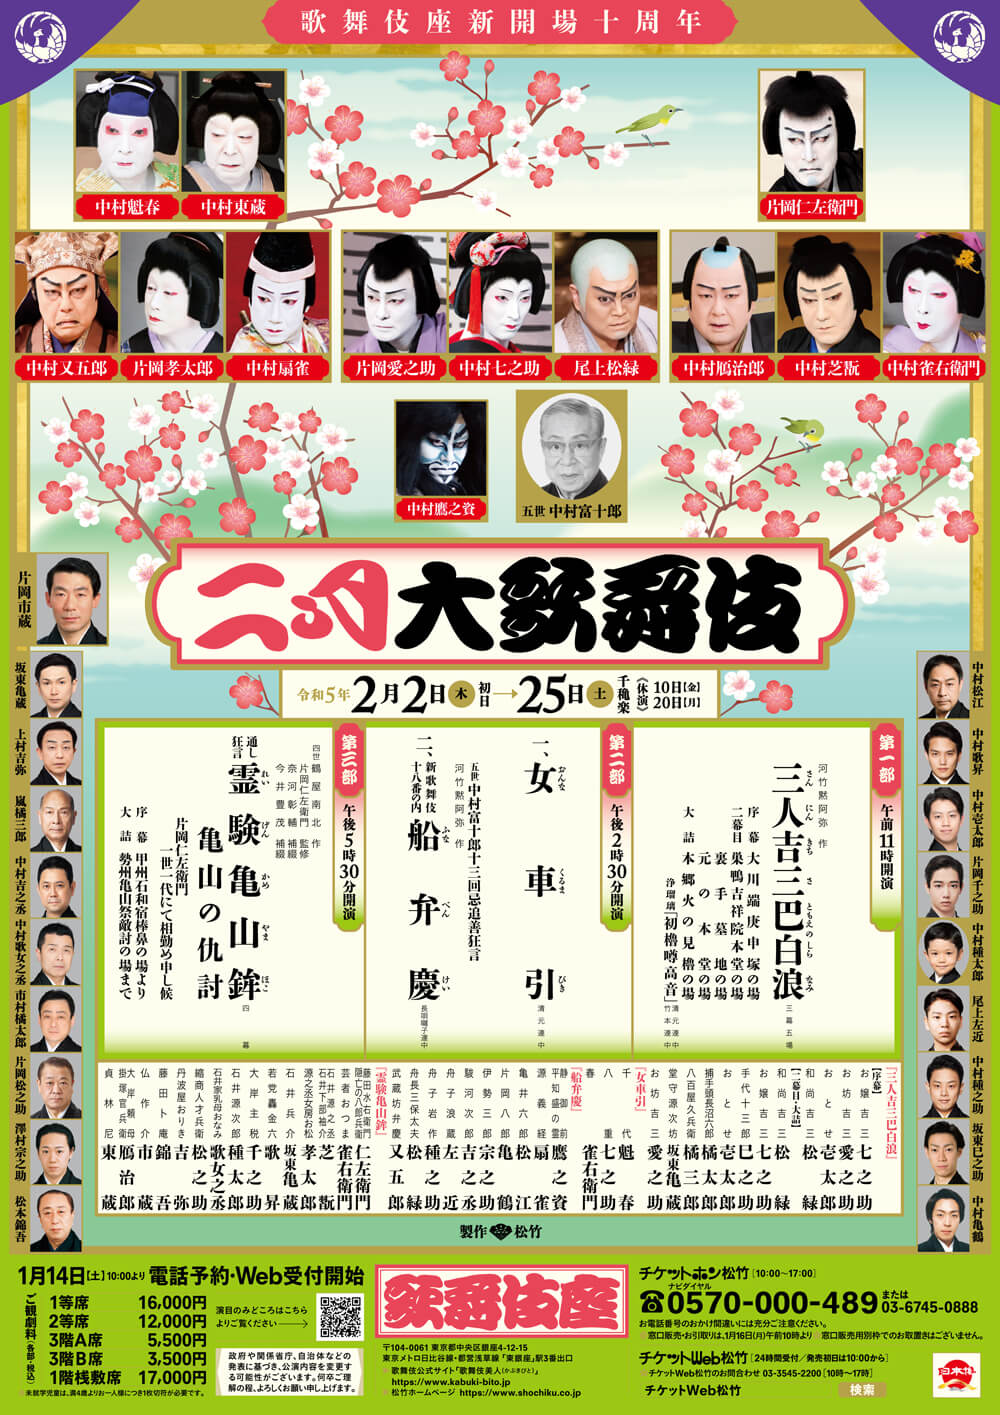 February Program at the kabukiza